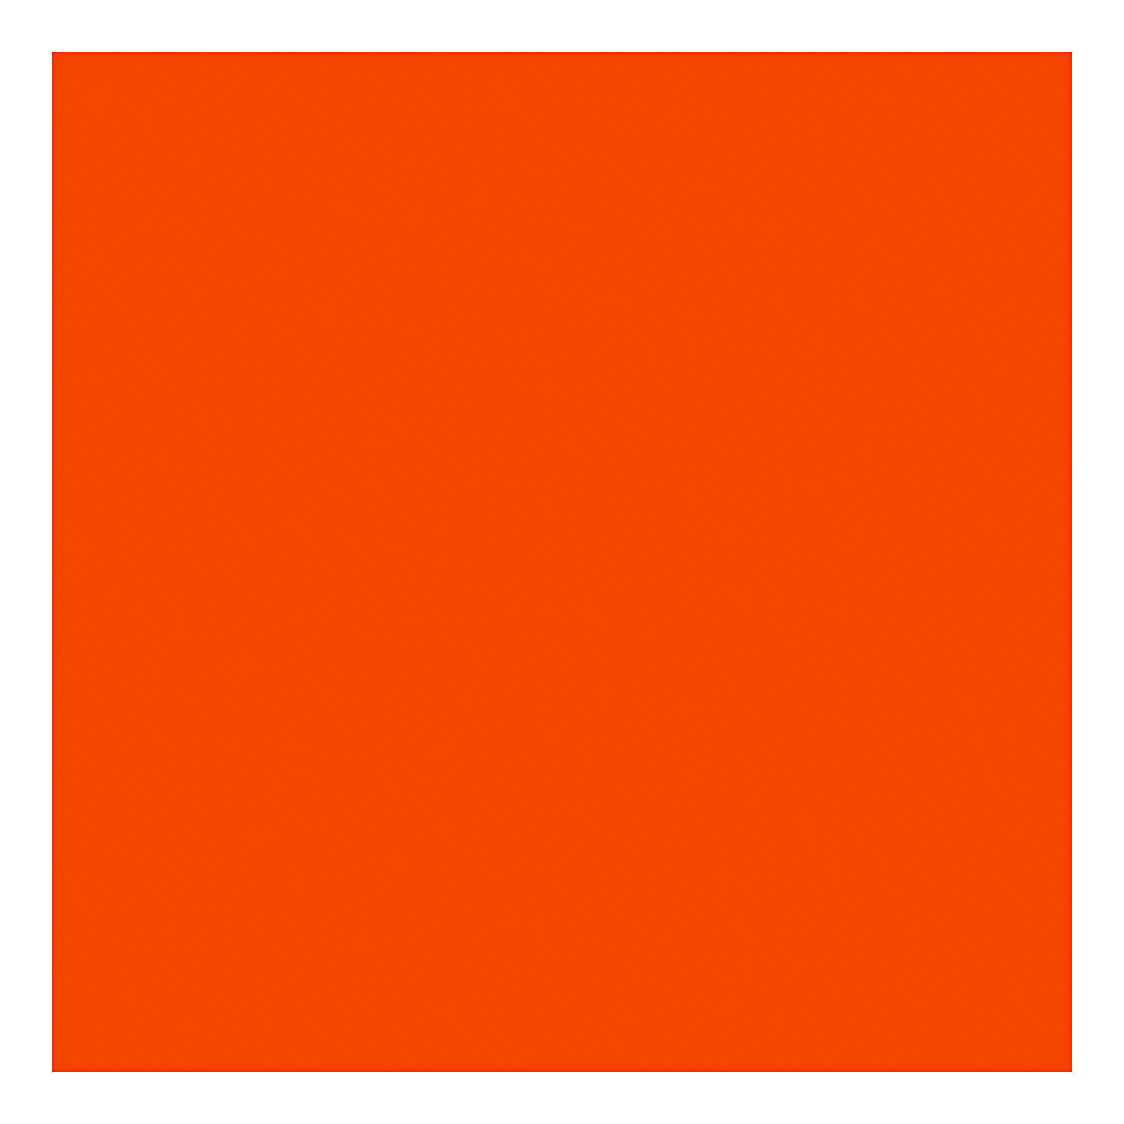 Peinture textile semi-opaque Textile Color - Orange, 50 ml